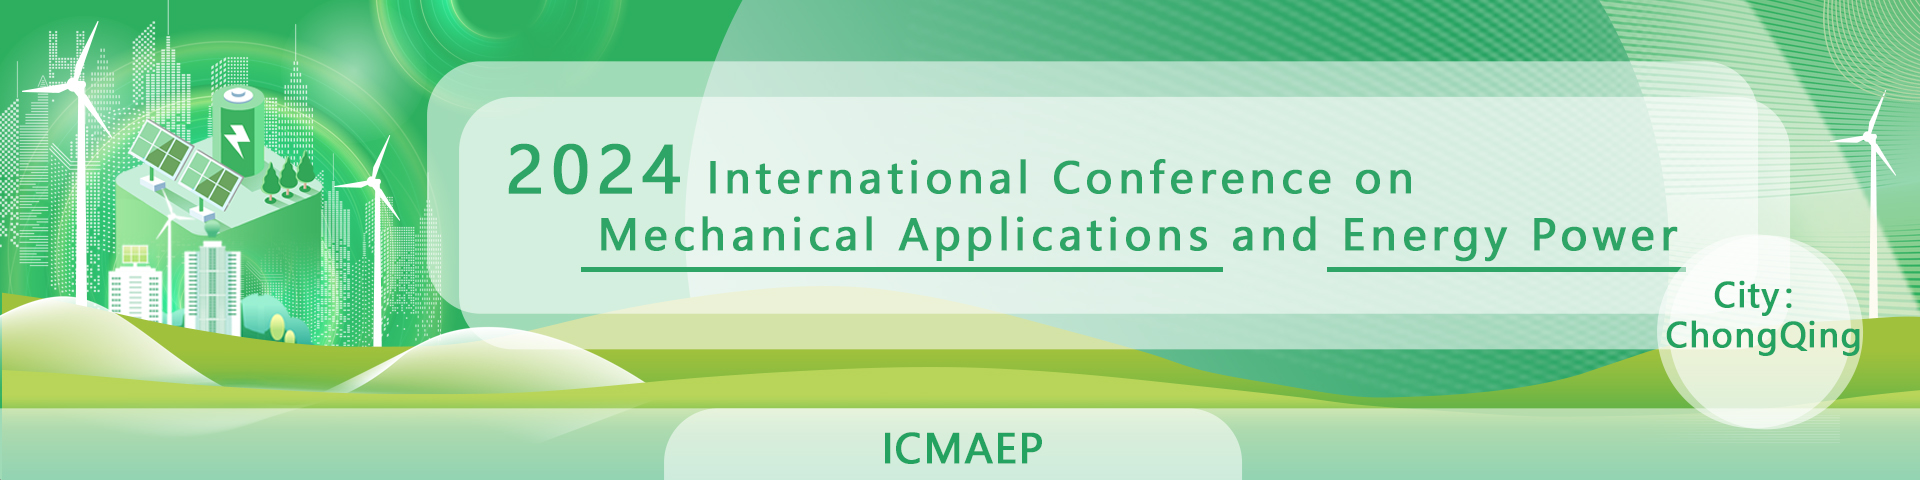 【EI会议|投稿优惠】2024年机械应用与能源动力国际会议(ICMAEP 2024)